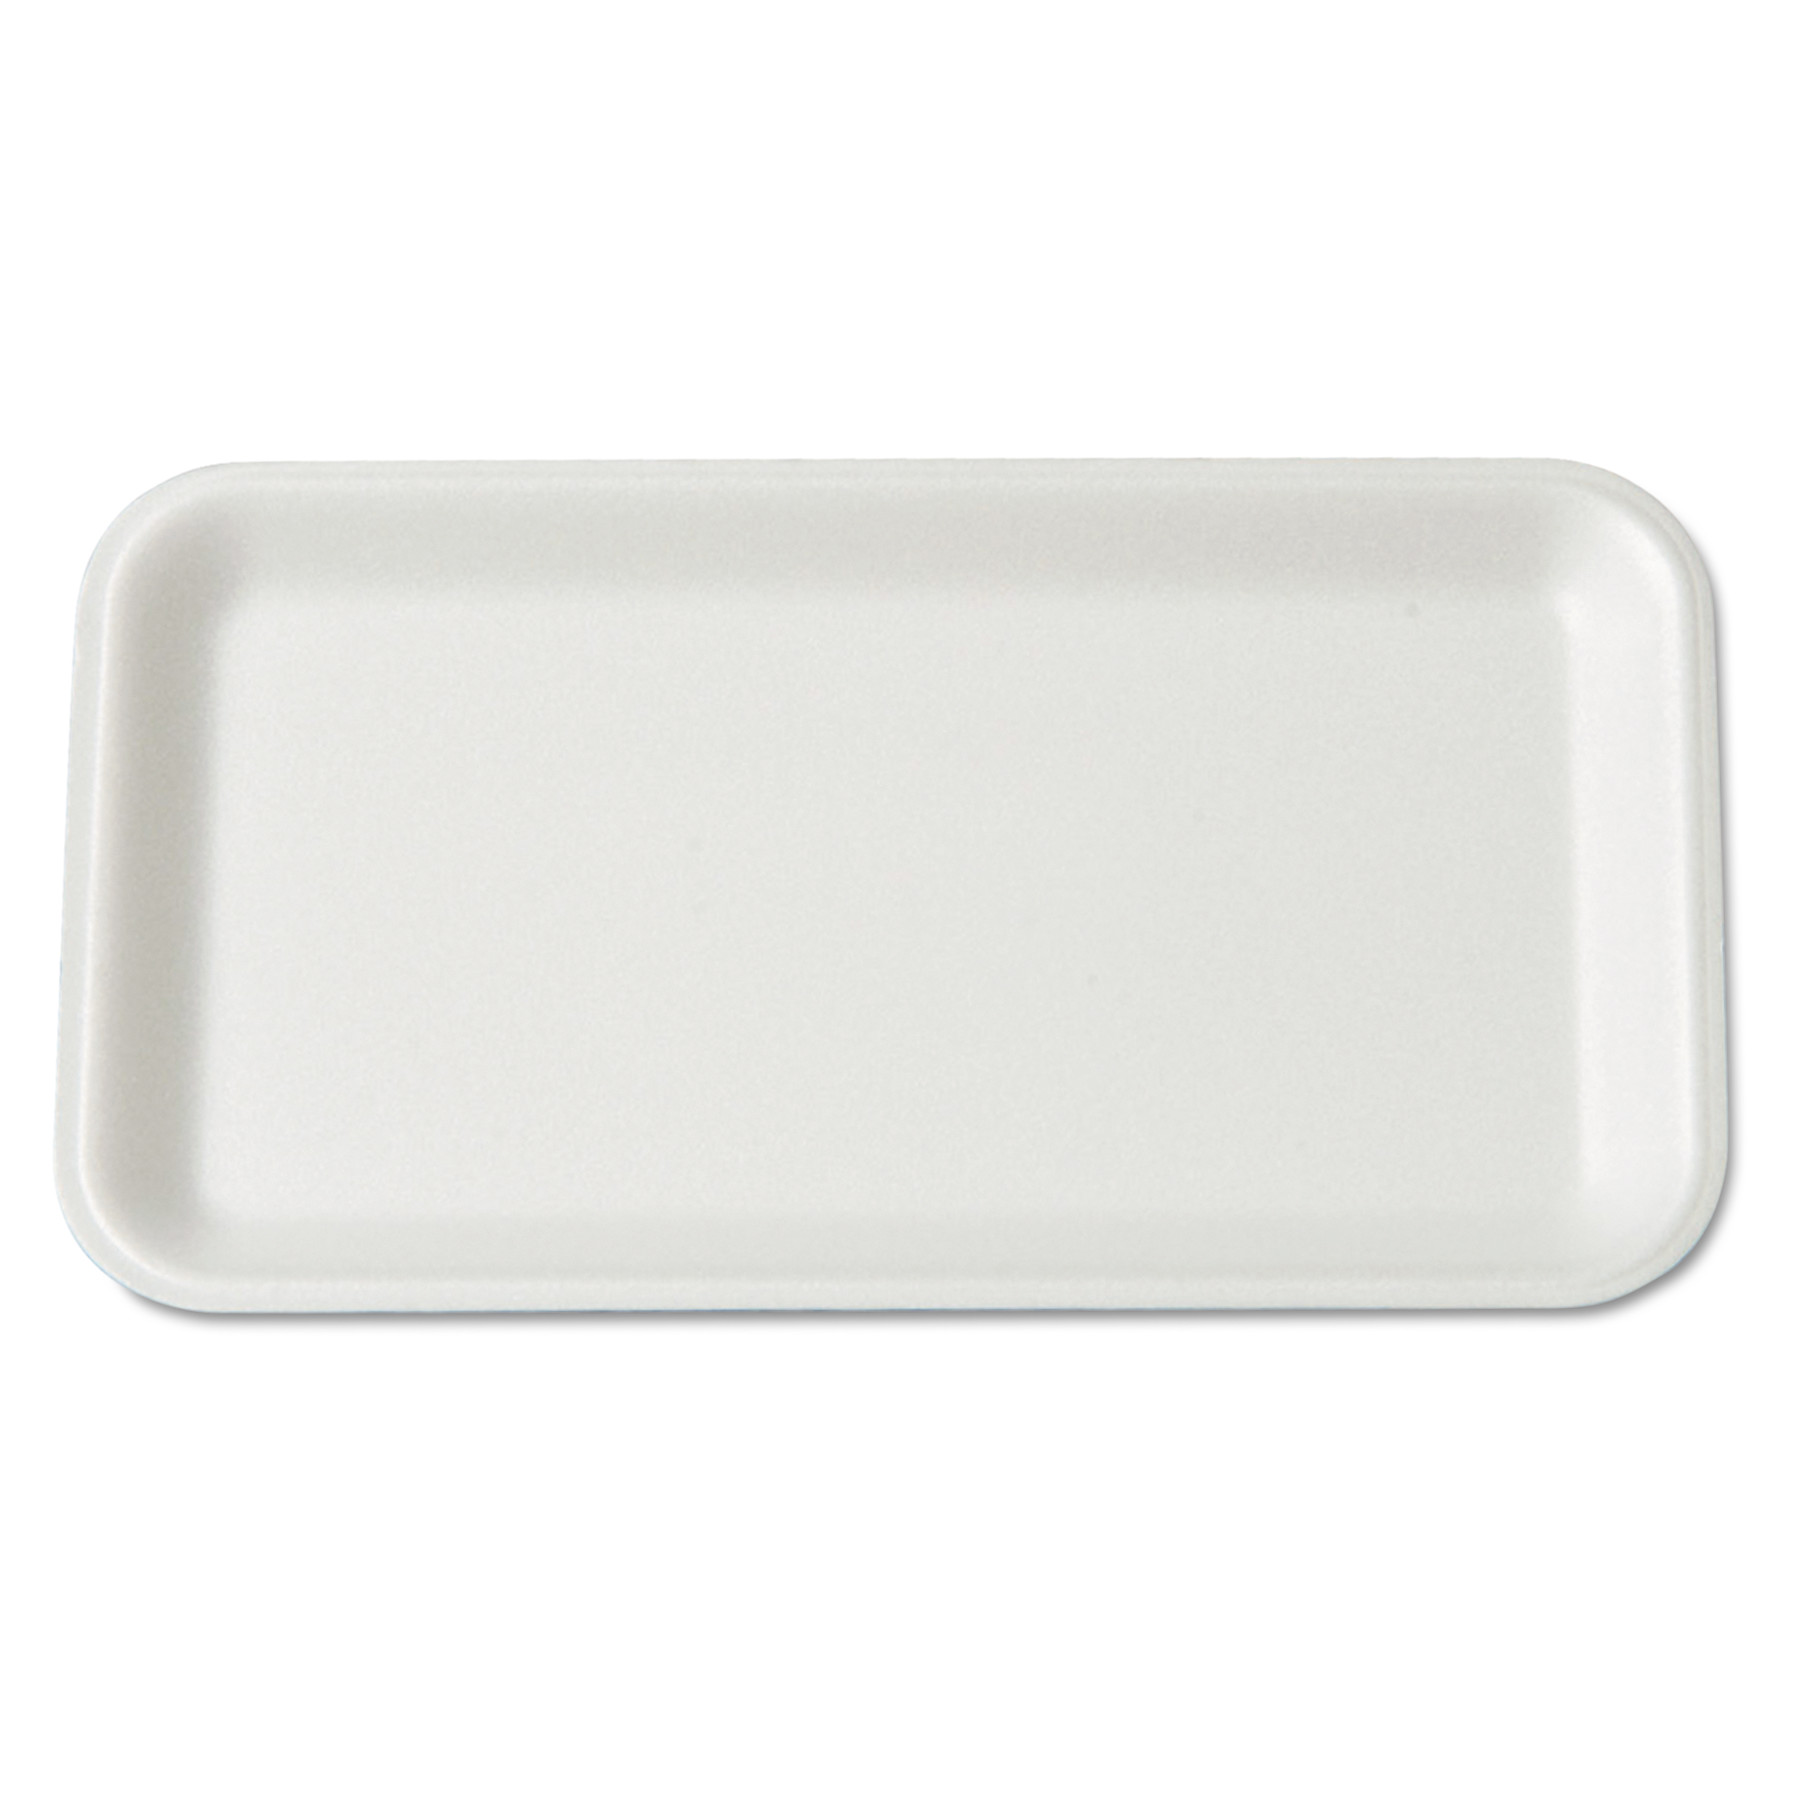 Genpak Supermarket Tray, Foam, White, 8-1/4x4-3/4, 125/Bag -GNP17SWH - image 1 of 2